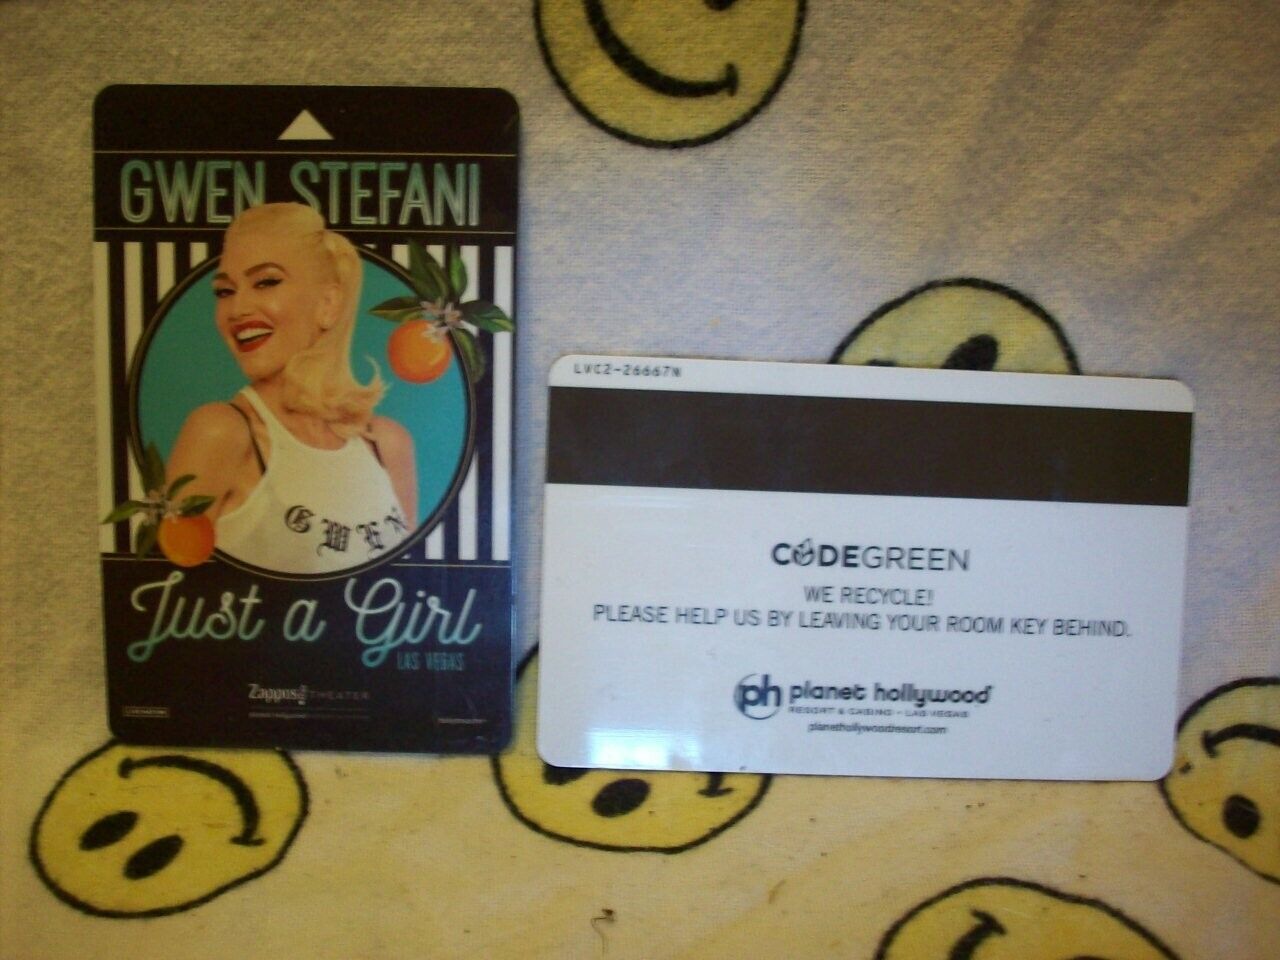 2021 Gwen Stephani Concert Planet Hollywood Casino Hotel Las Vegas Room Key Card